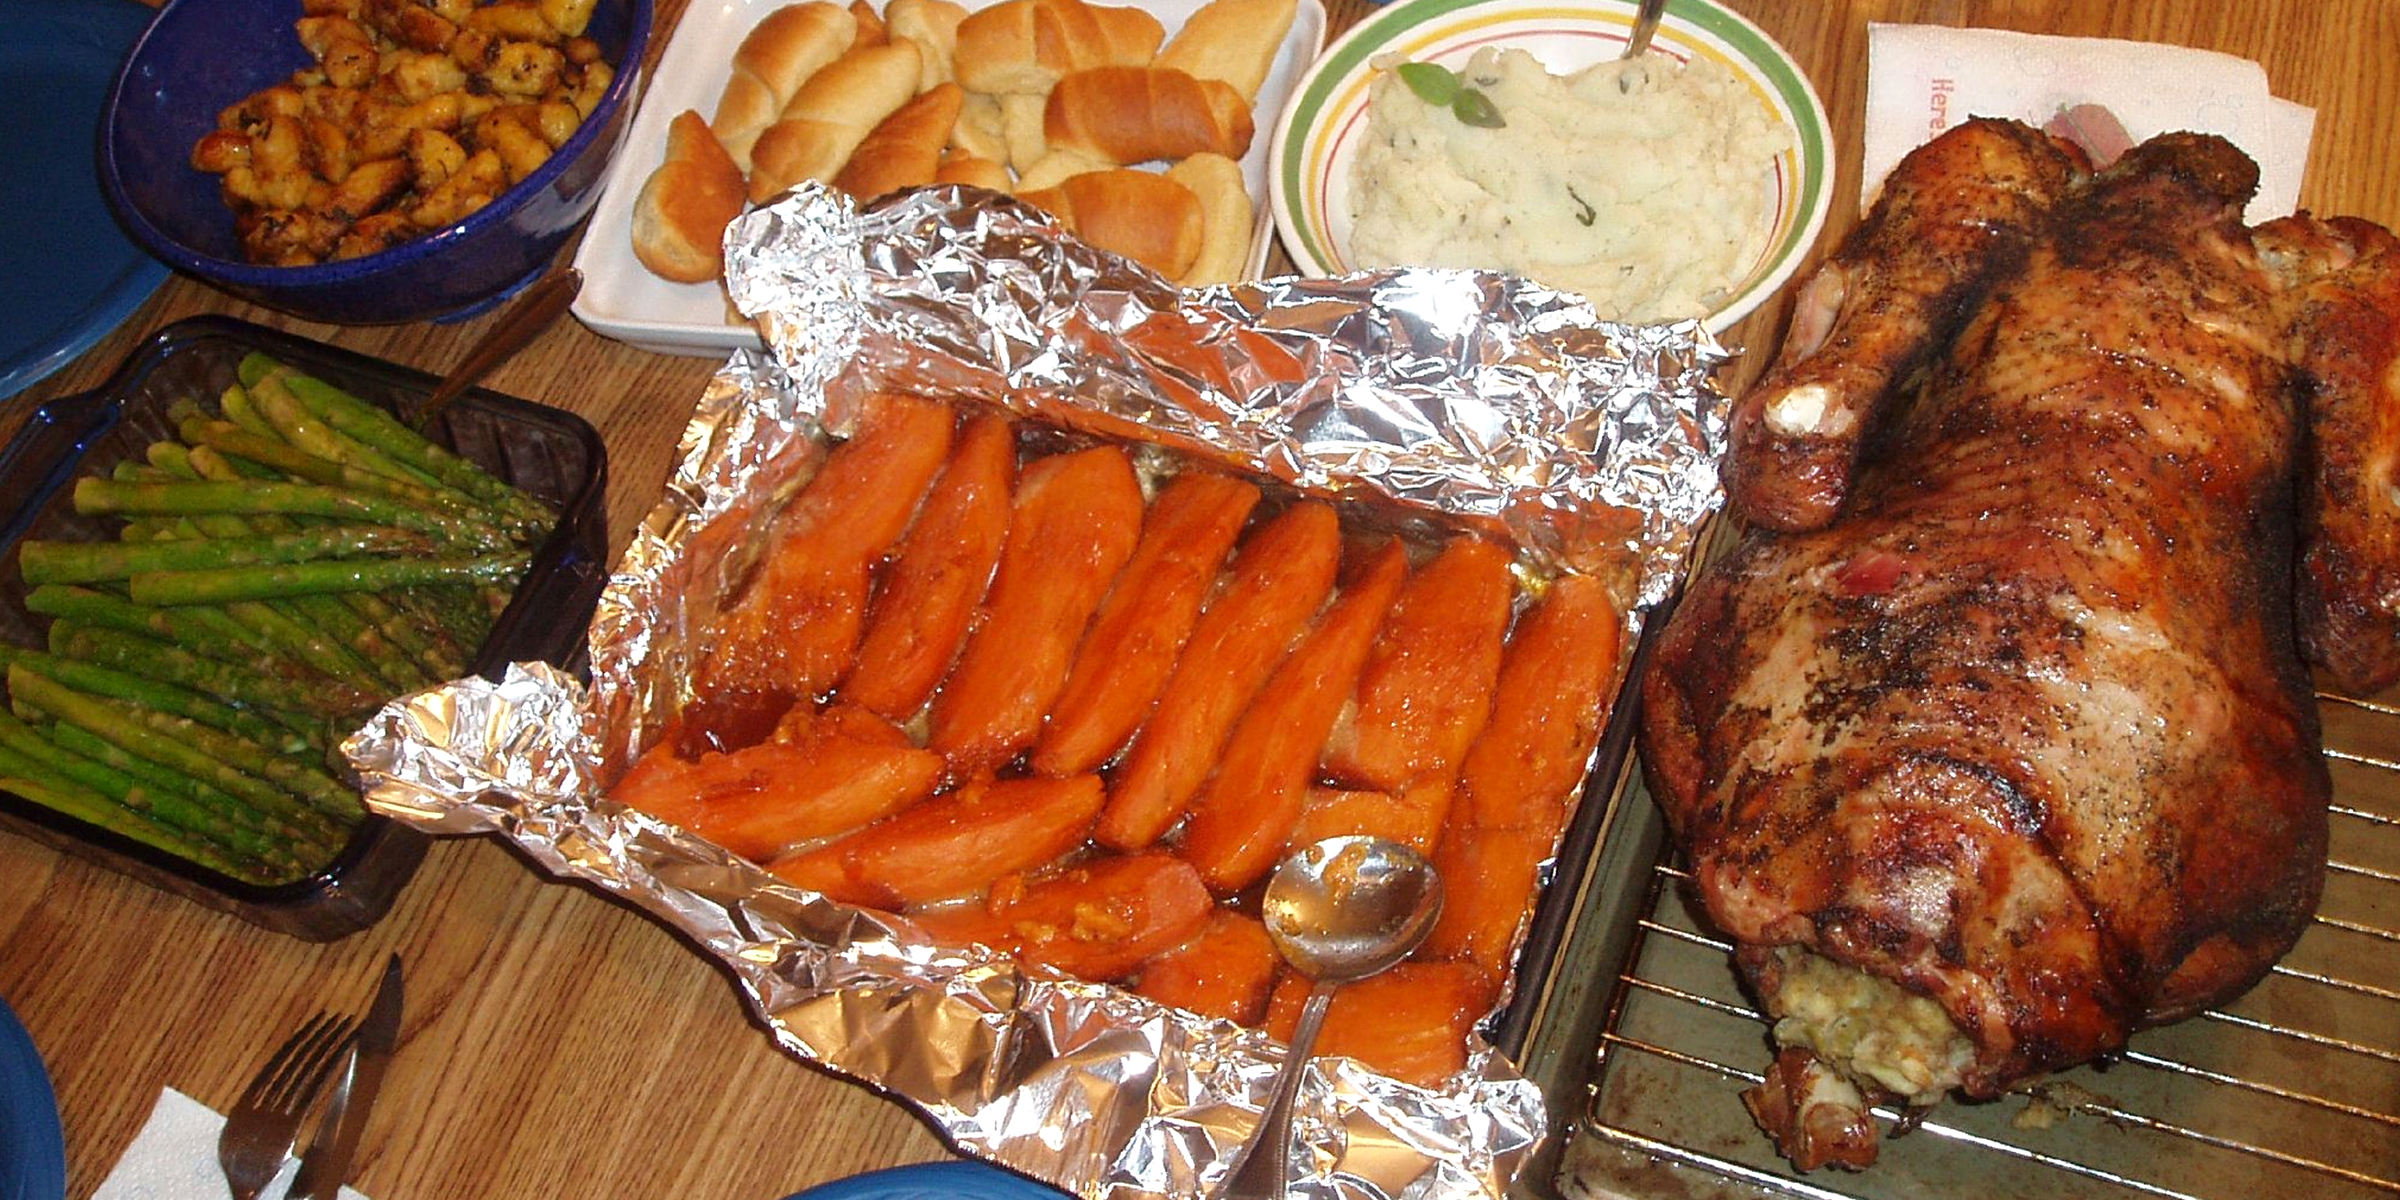 Thanksgiving-Mahlzeit | Quelle: flickr.com/johncarljohnson/CC BY 2.0